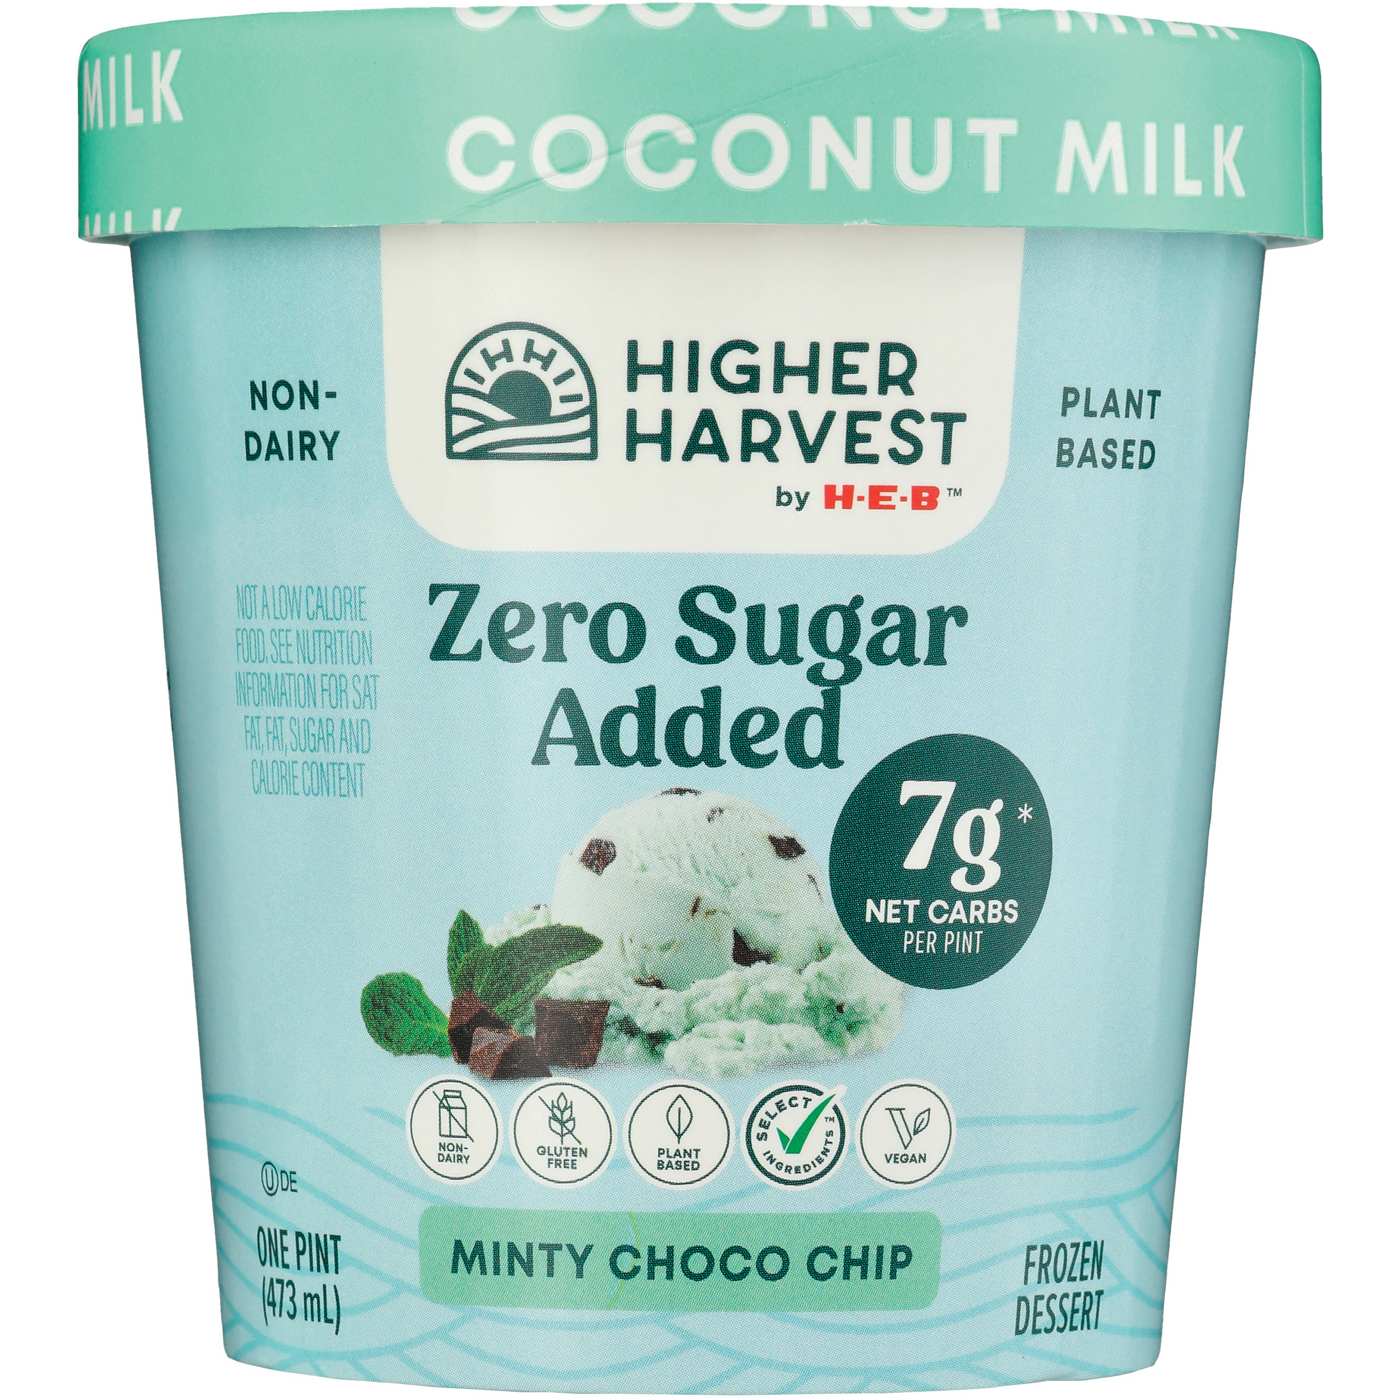 Higher Harvest by H-E-B Zero Sugar Added Non-Dairy Frozen Dessert - Minty Choco Chip; image 2 of 2